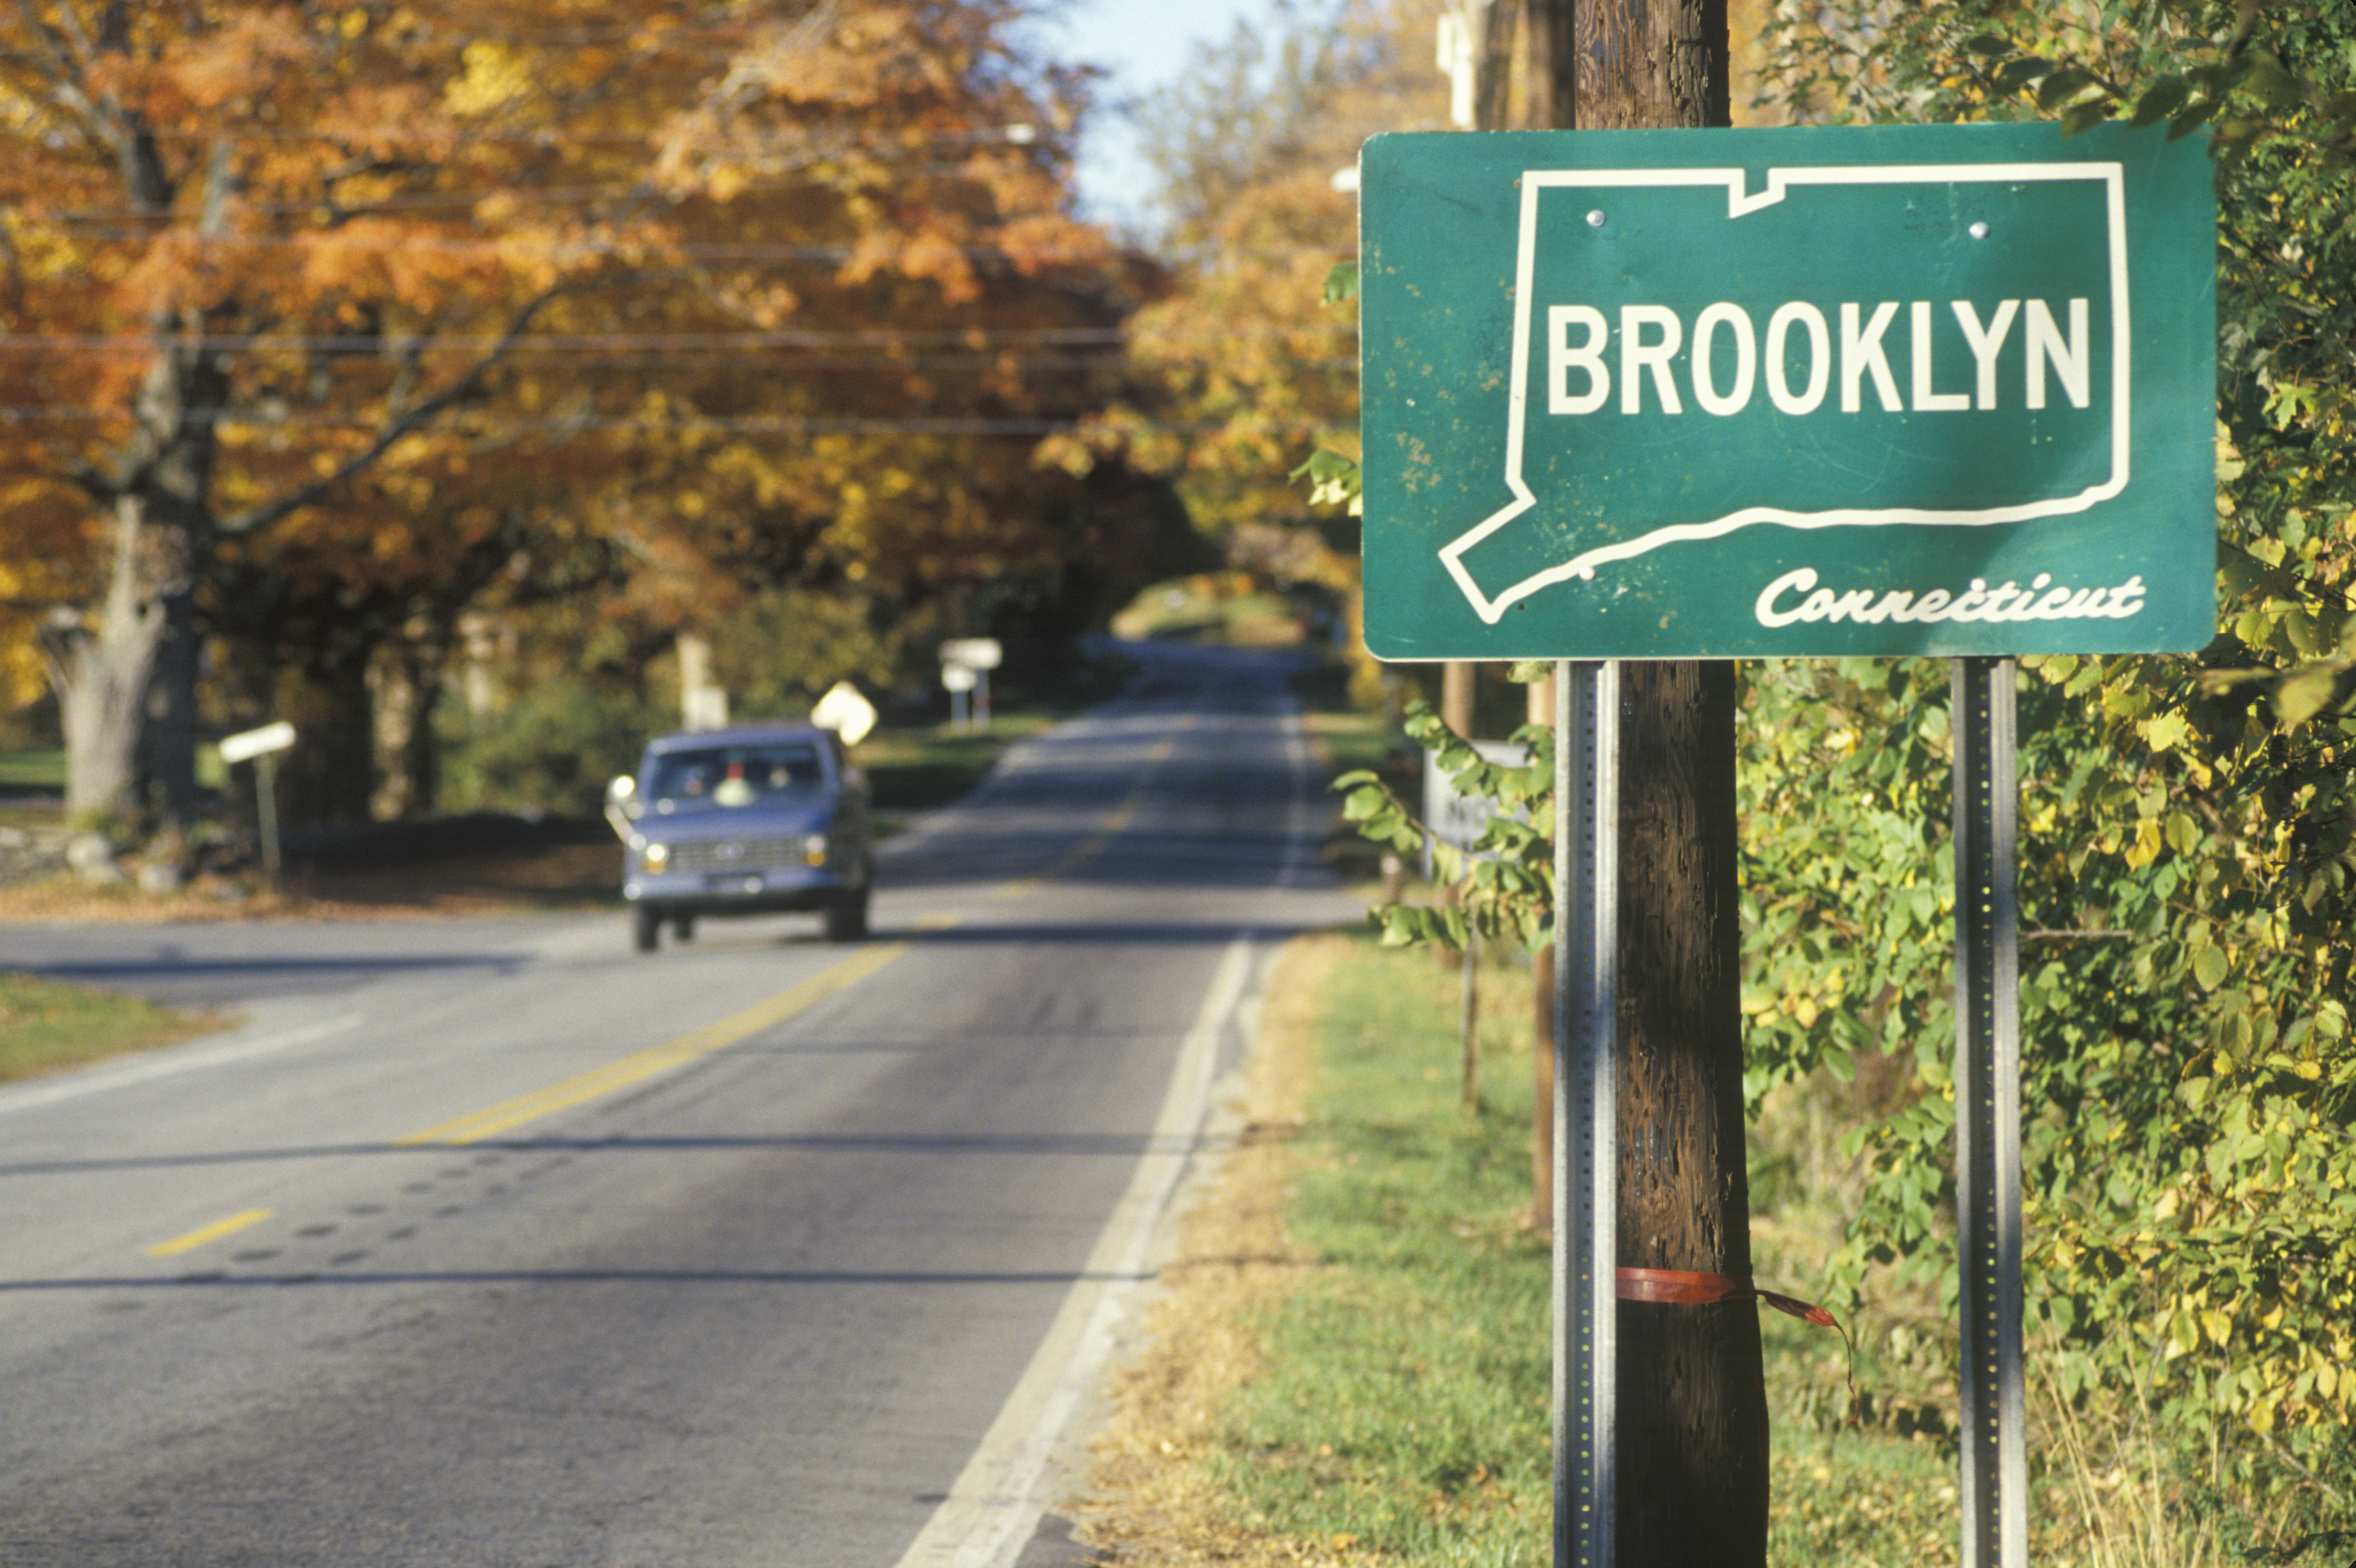 Brooklyn Connecticut city limits sign